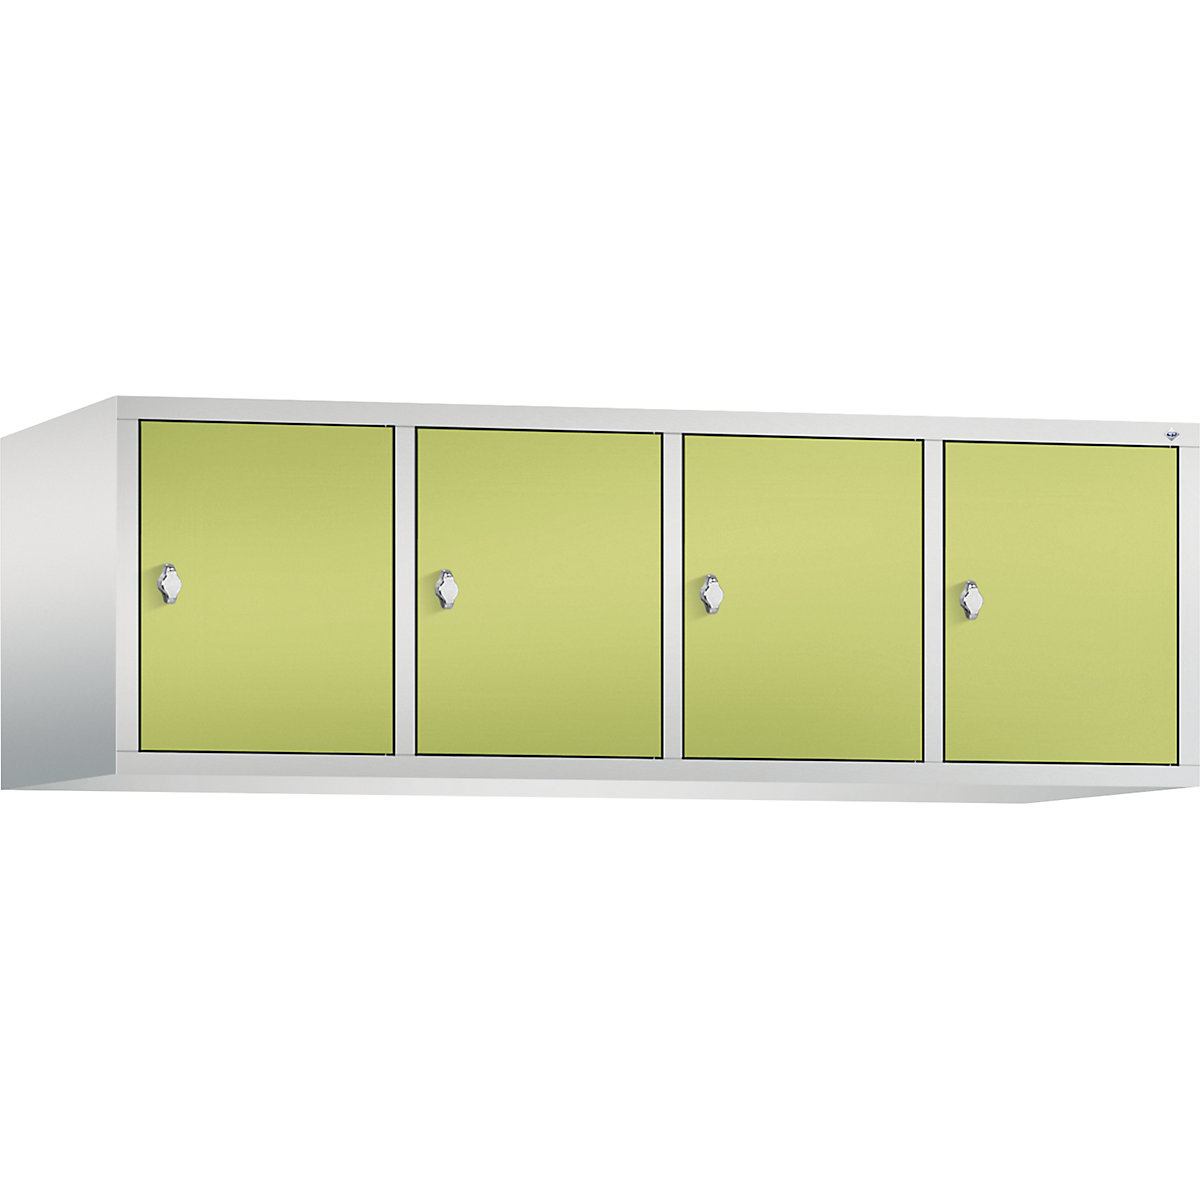 C+P – Altillo CLASSIC, 4 compartimentos, anchura de compartimento 400 mm, gris luminoso / verde pistacho